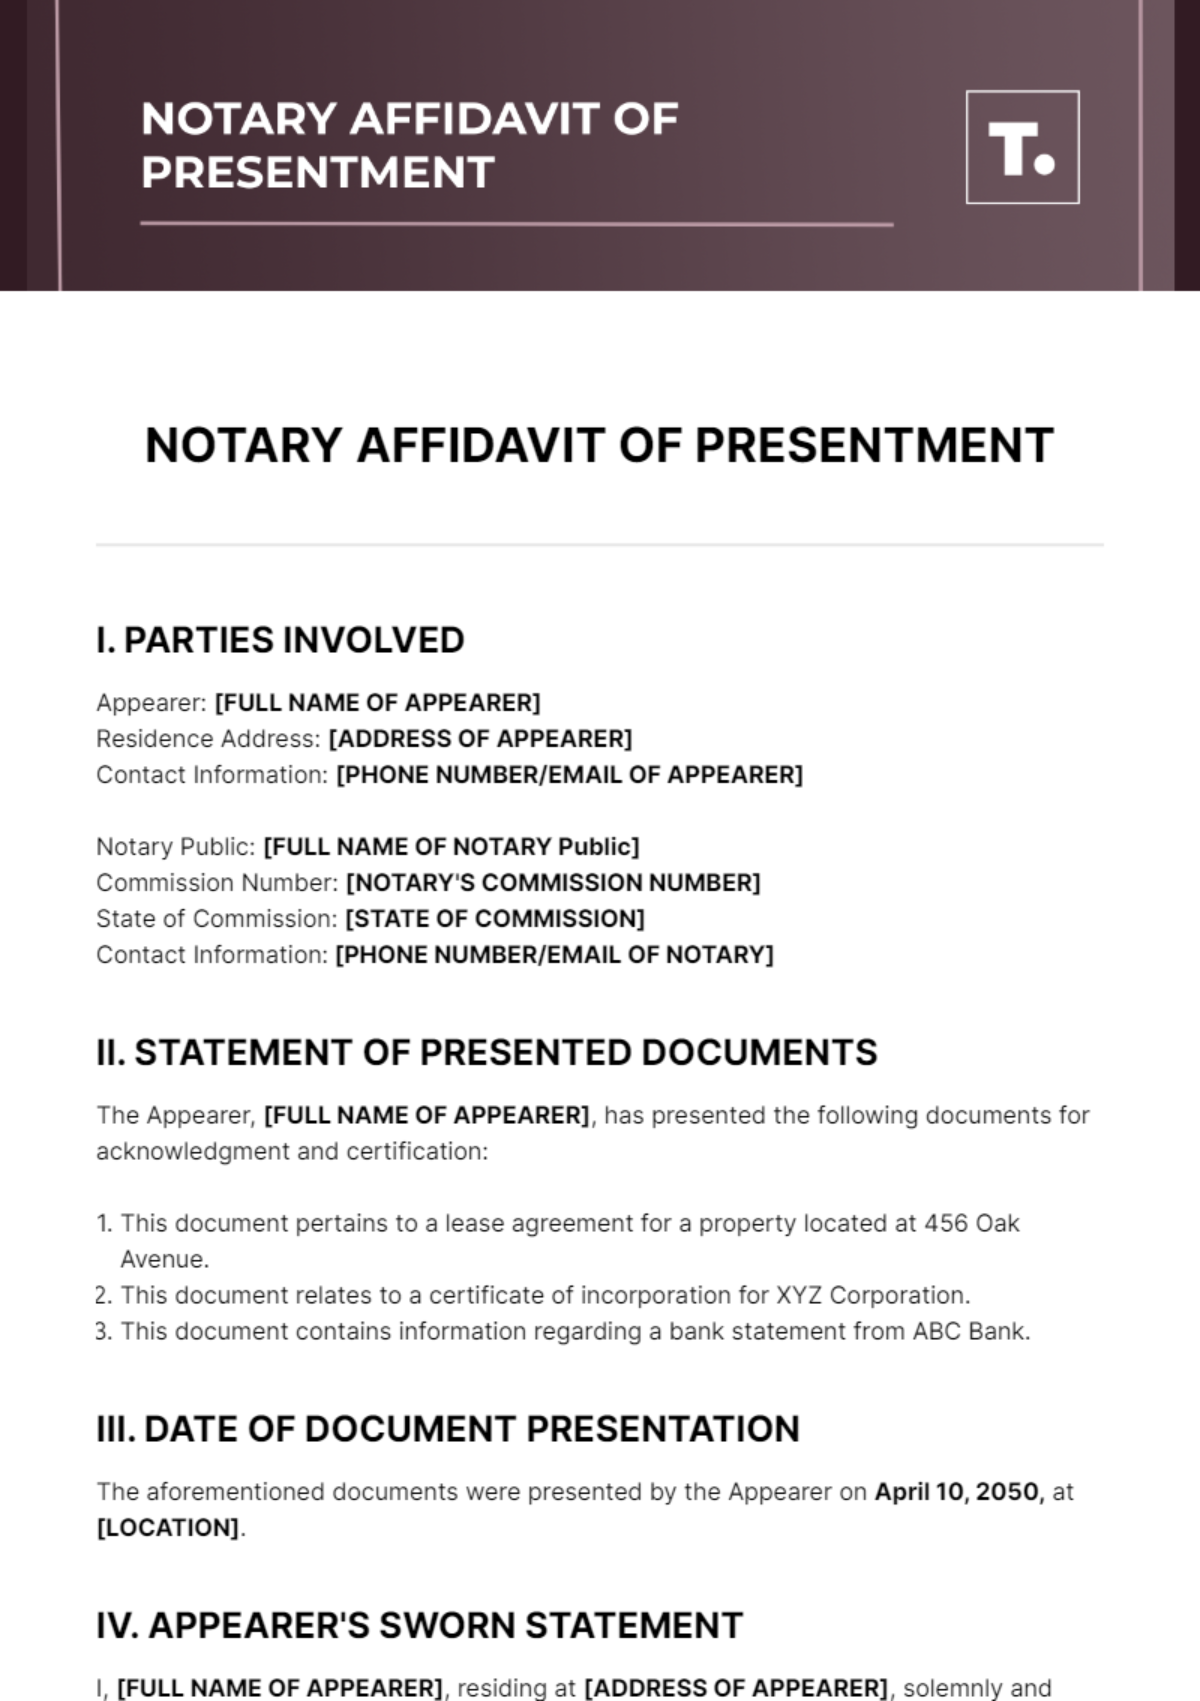 Notary Affidavit of Presentment Template